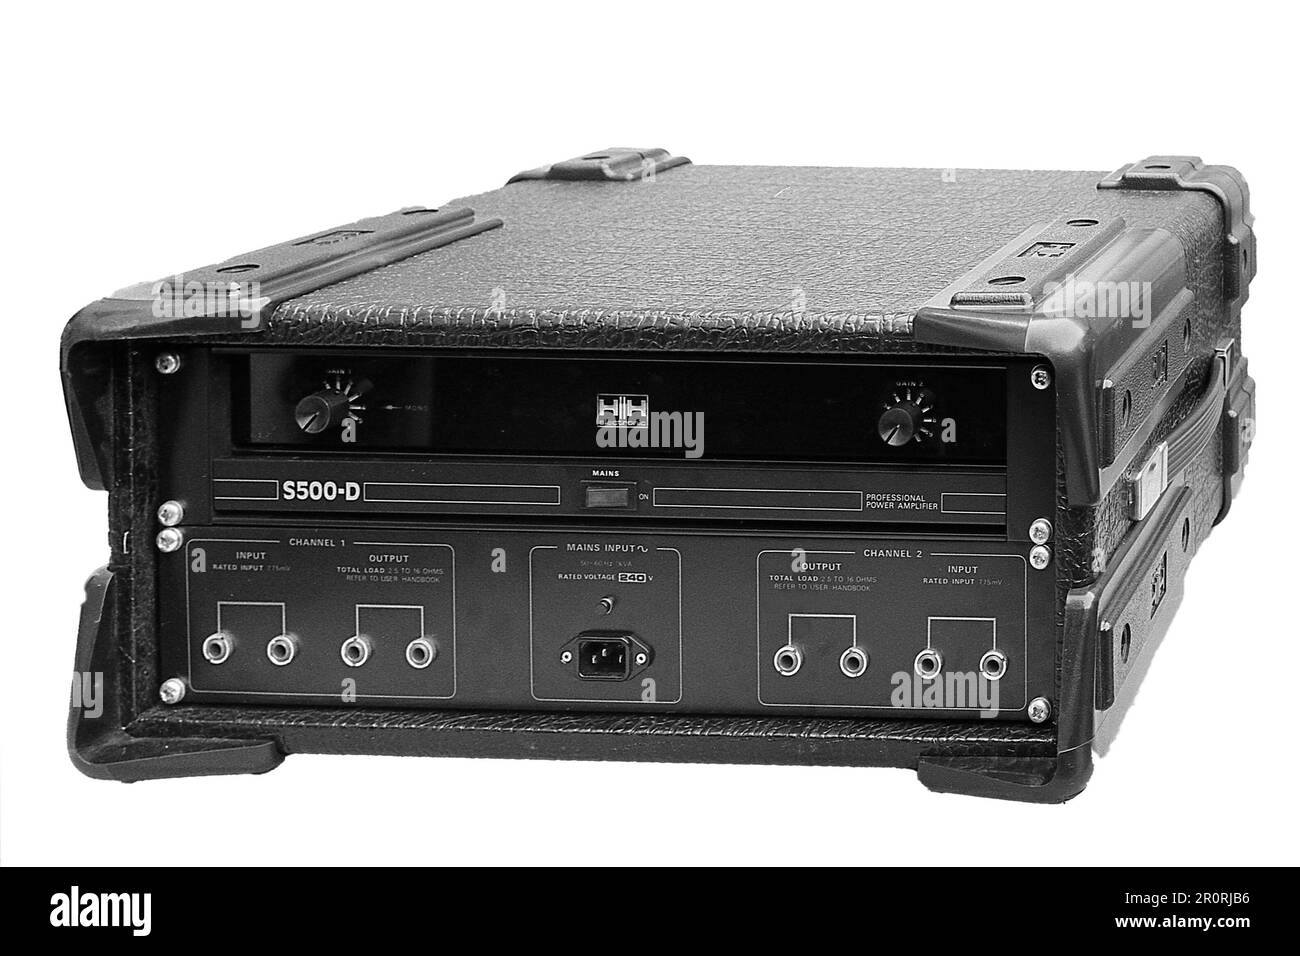 HH,Elecronic,Power Amplifier,circa 1980,500 Watt,Stereo,PA,Disco,Band,Archive,Photo by Baxwalker Stock Photo